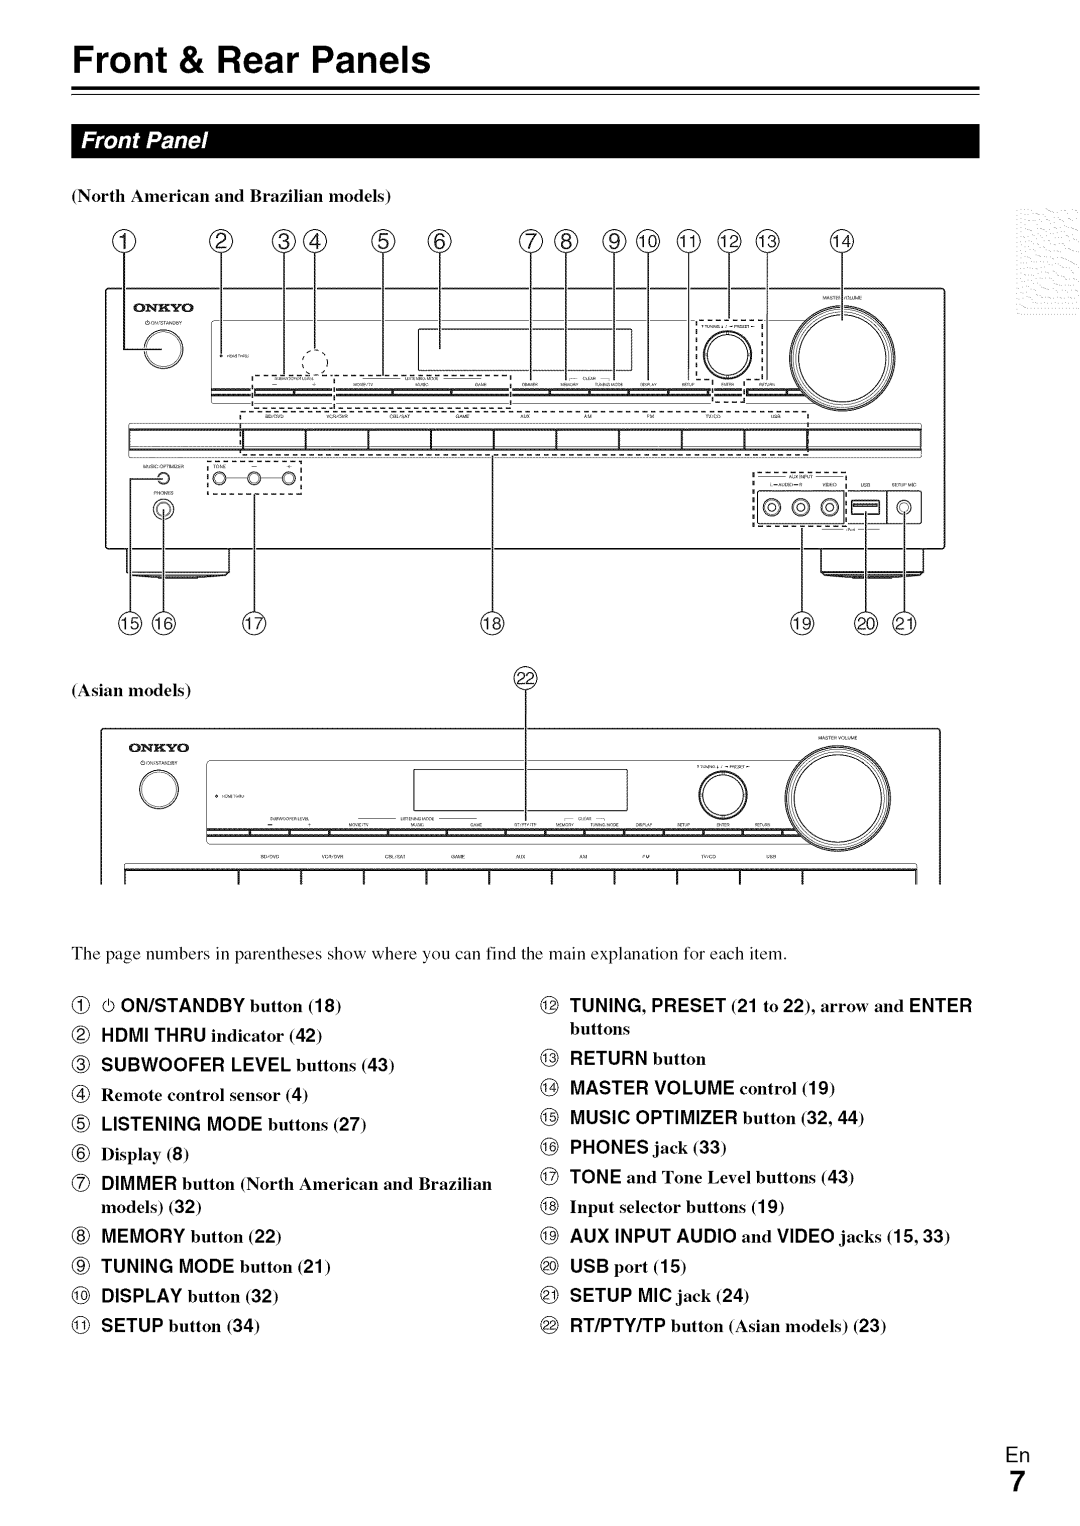 Onkyo HT-R590 instruction manual Front & Rear Panels 